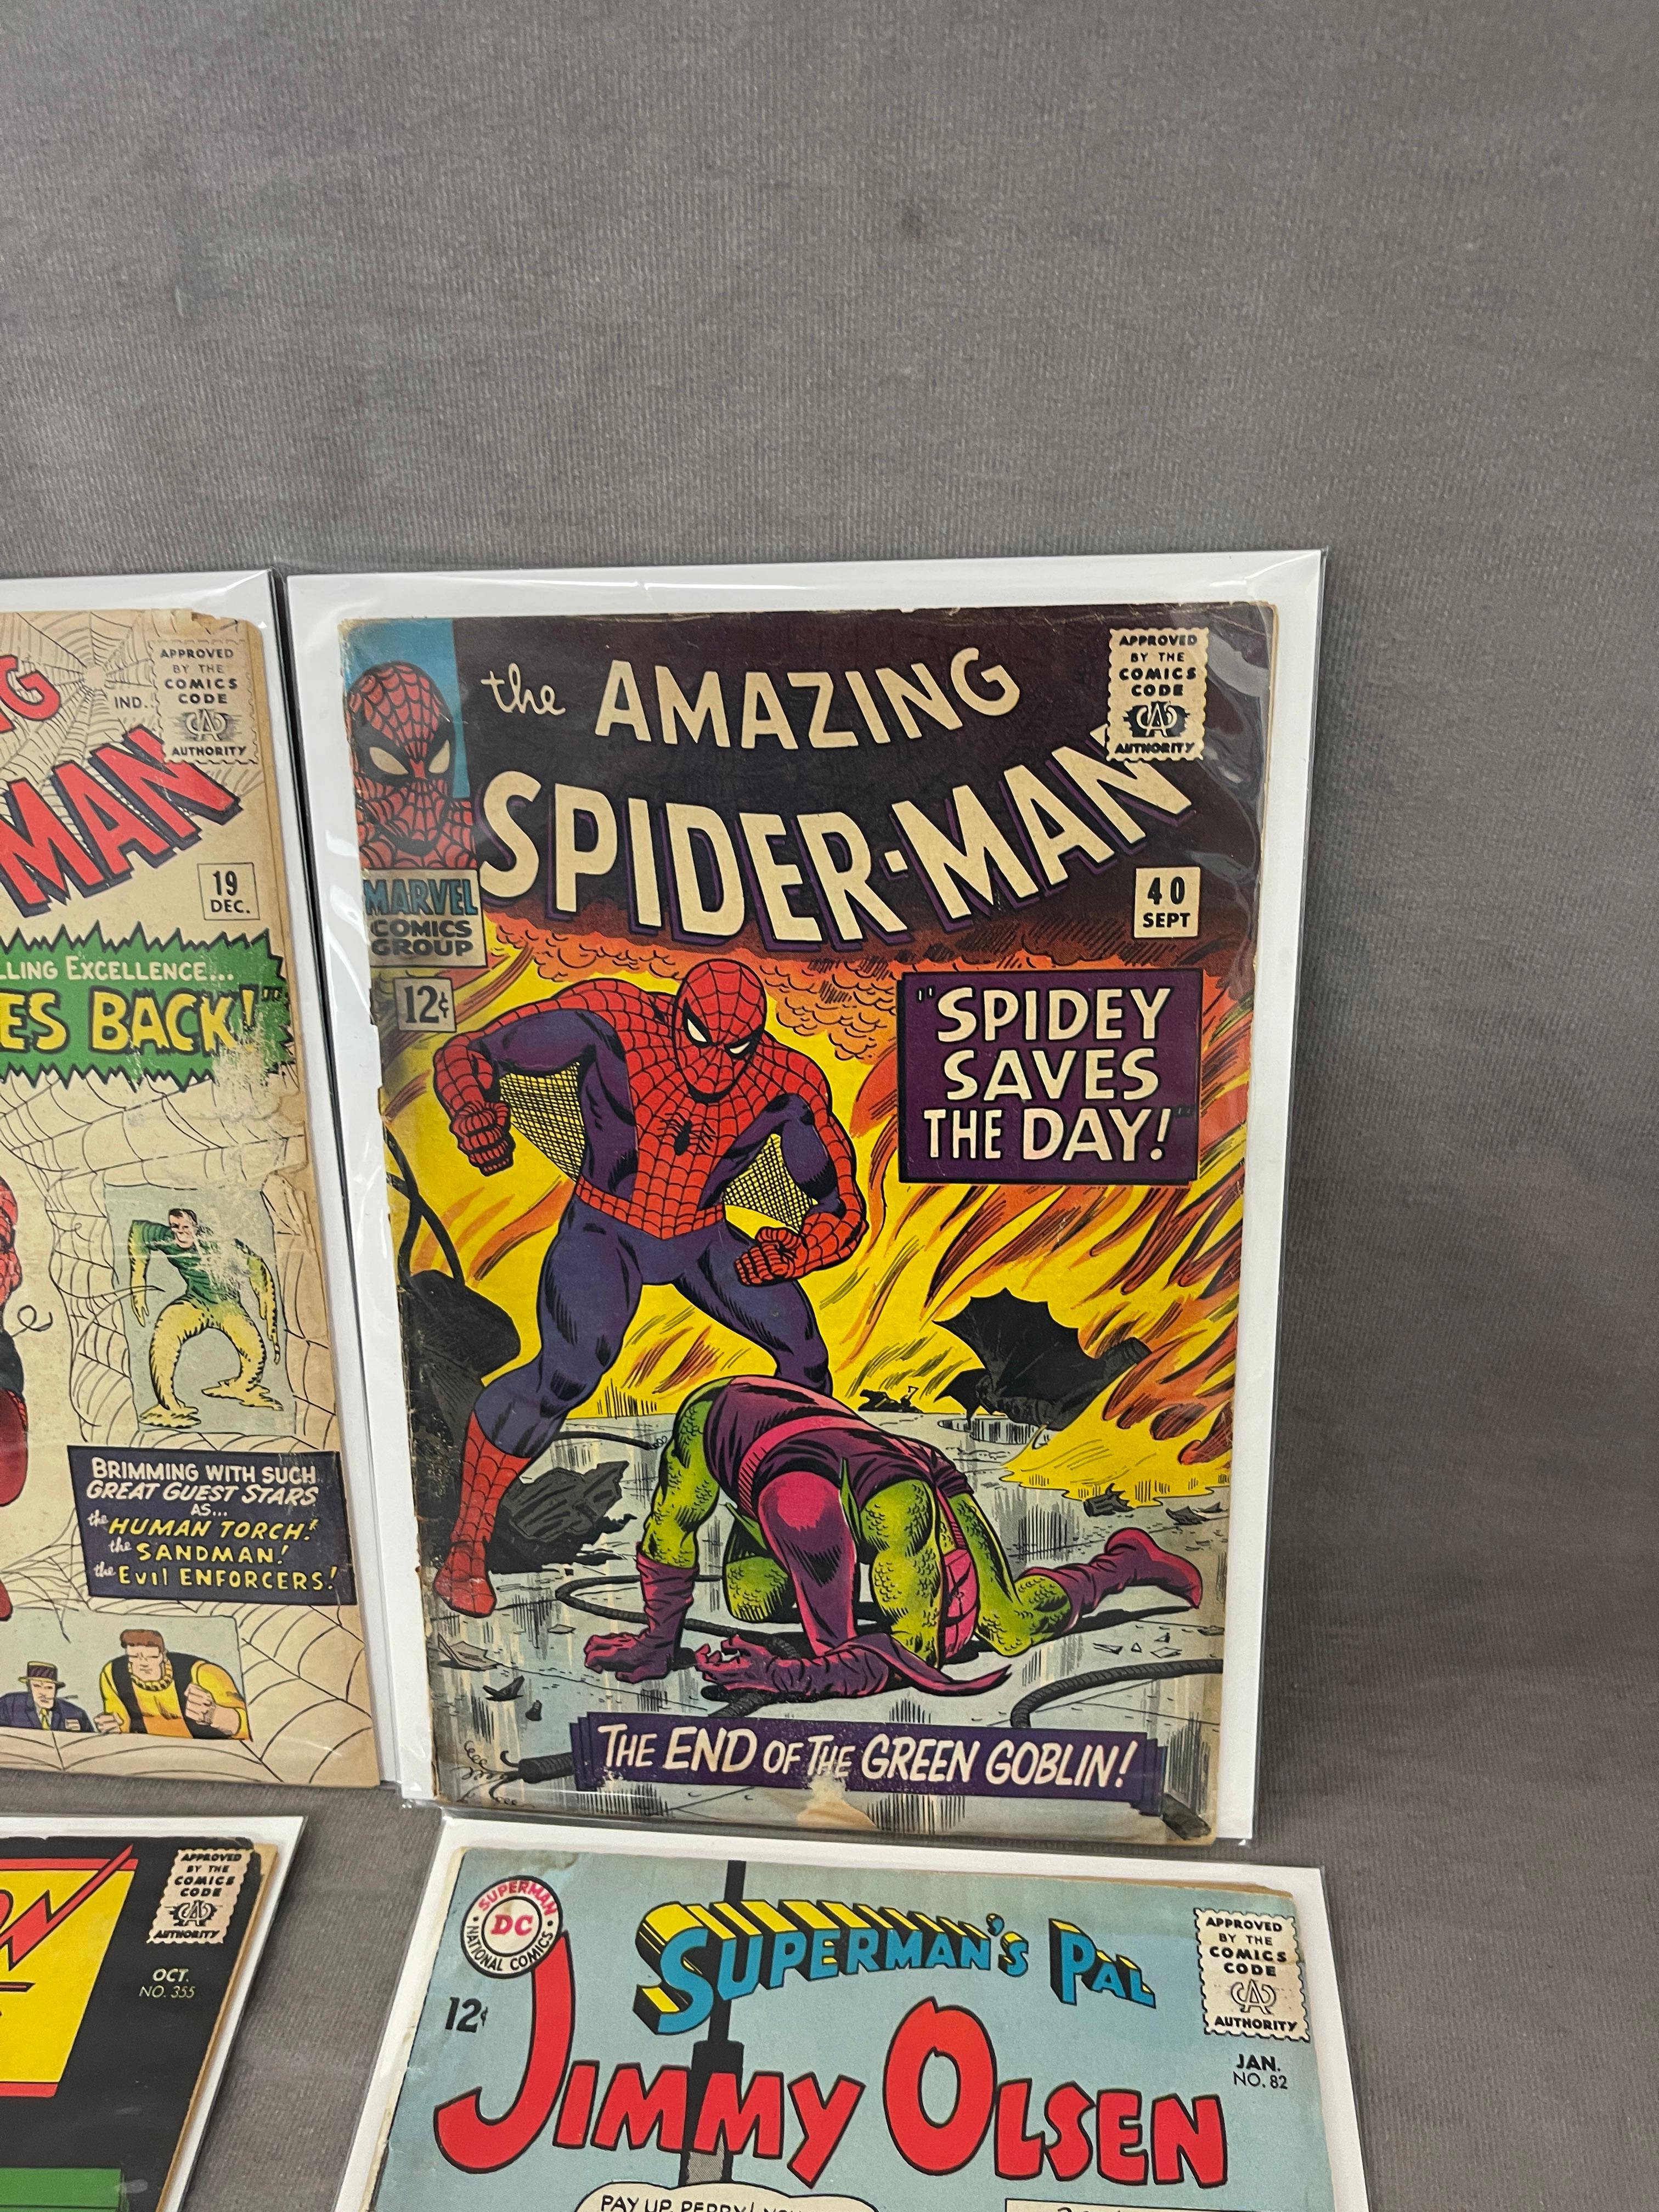 Amazing Spiderman #19 & #40 Green Goblin Comic Book Collection